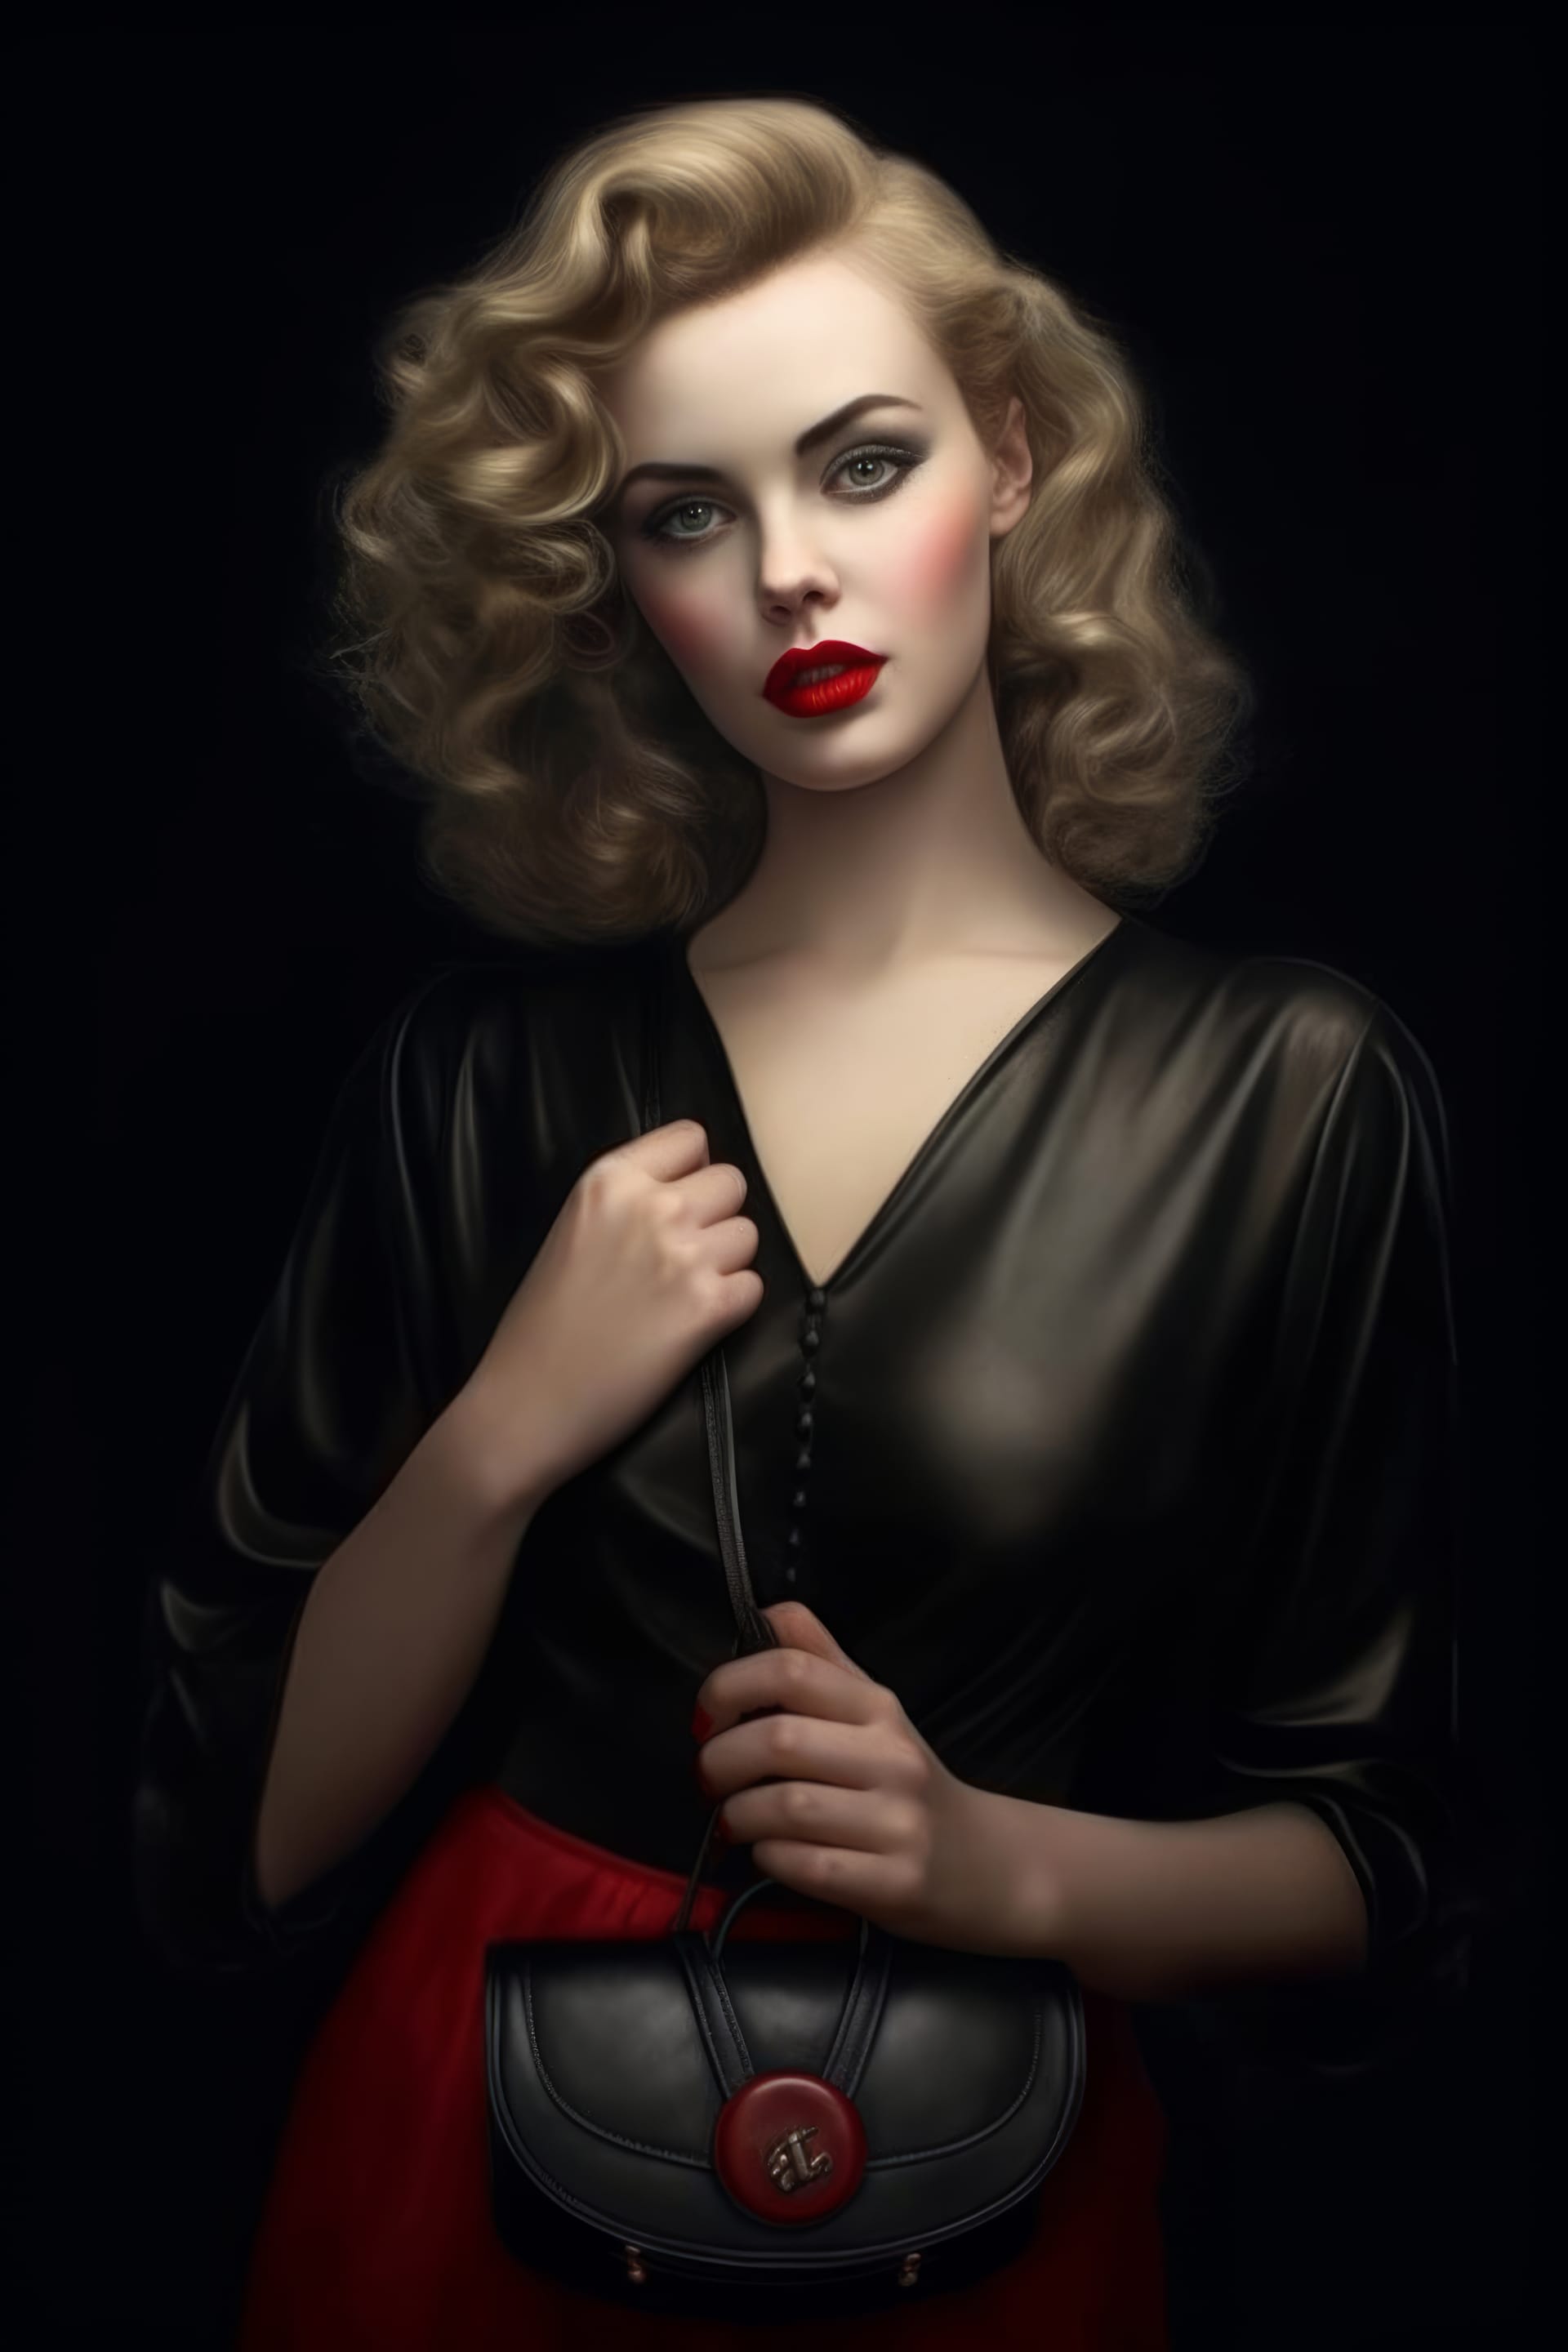 Best instagram profile picture woman black dress evocative artwork portraiture